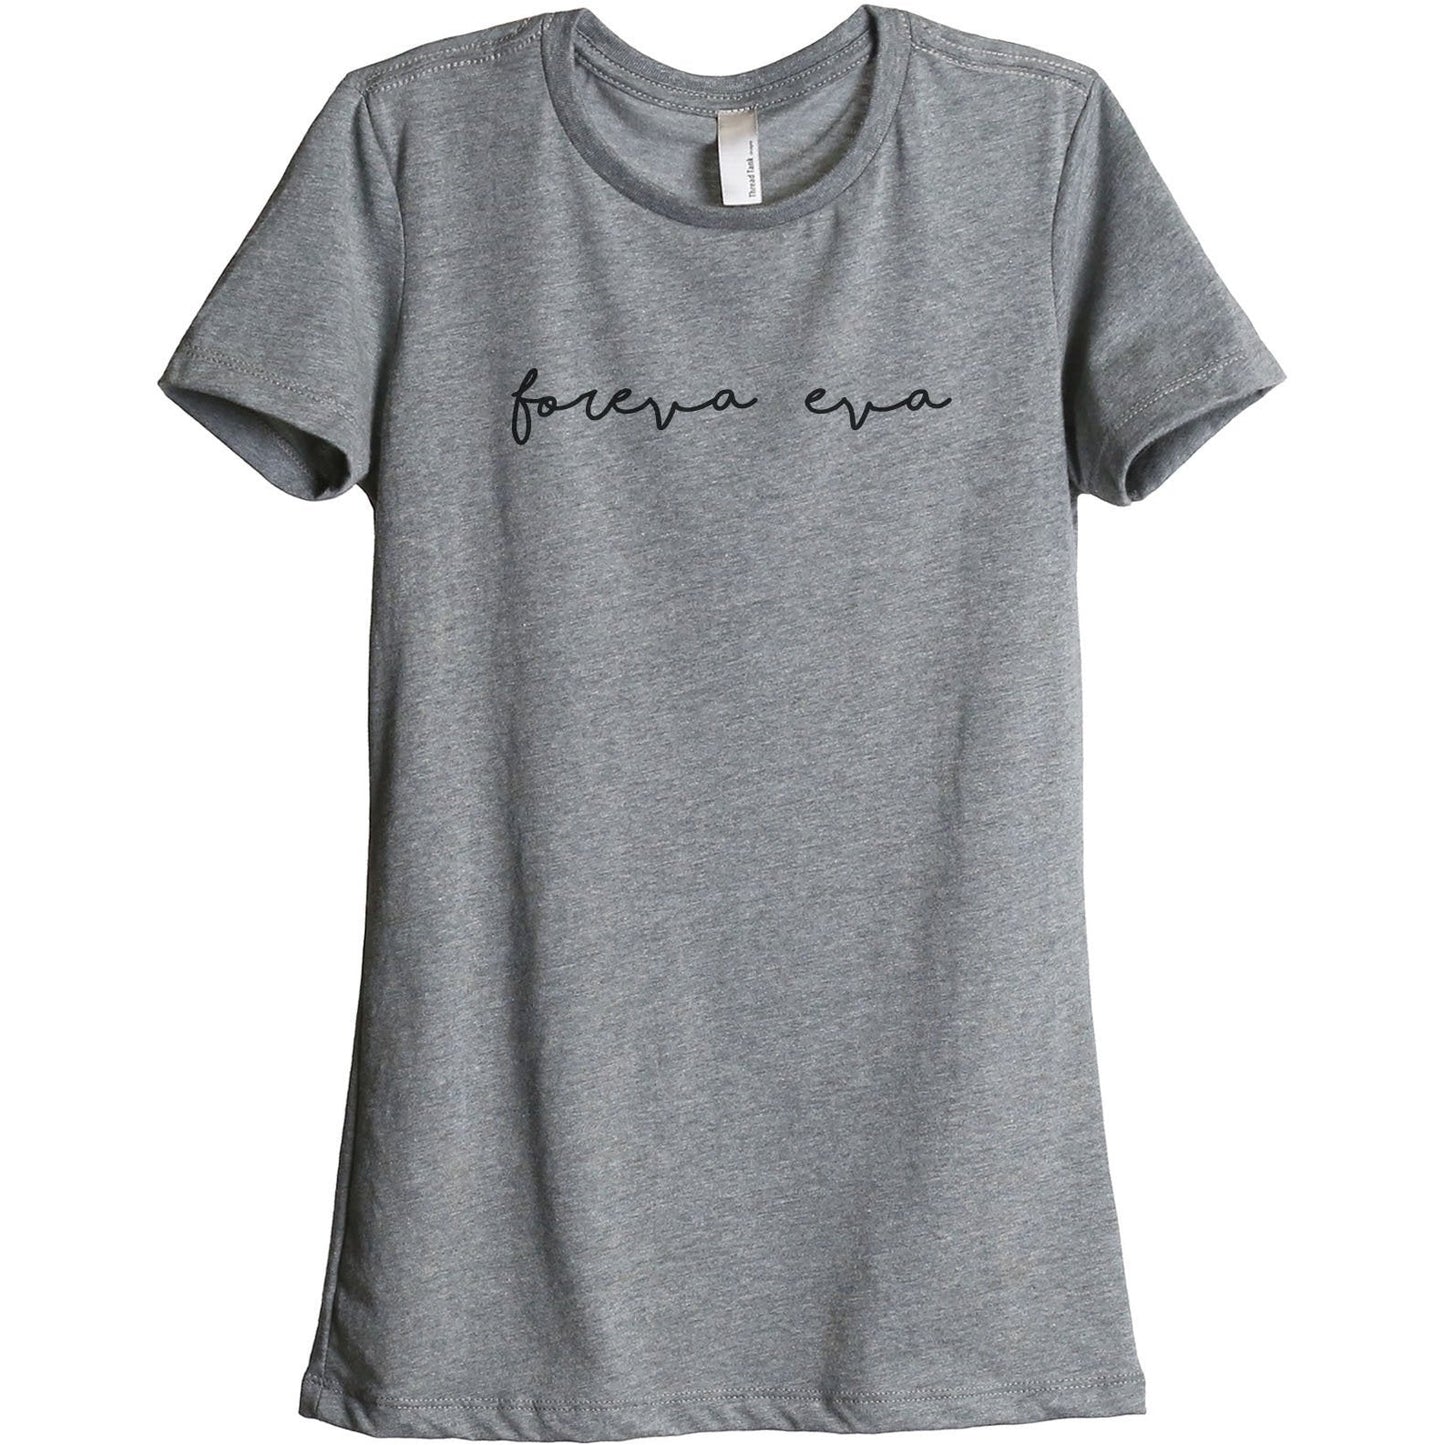 Foreva Eva Women's Relaxed Crewneck T-Shirt Top Tee Heather Grey